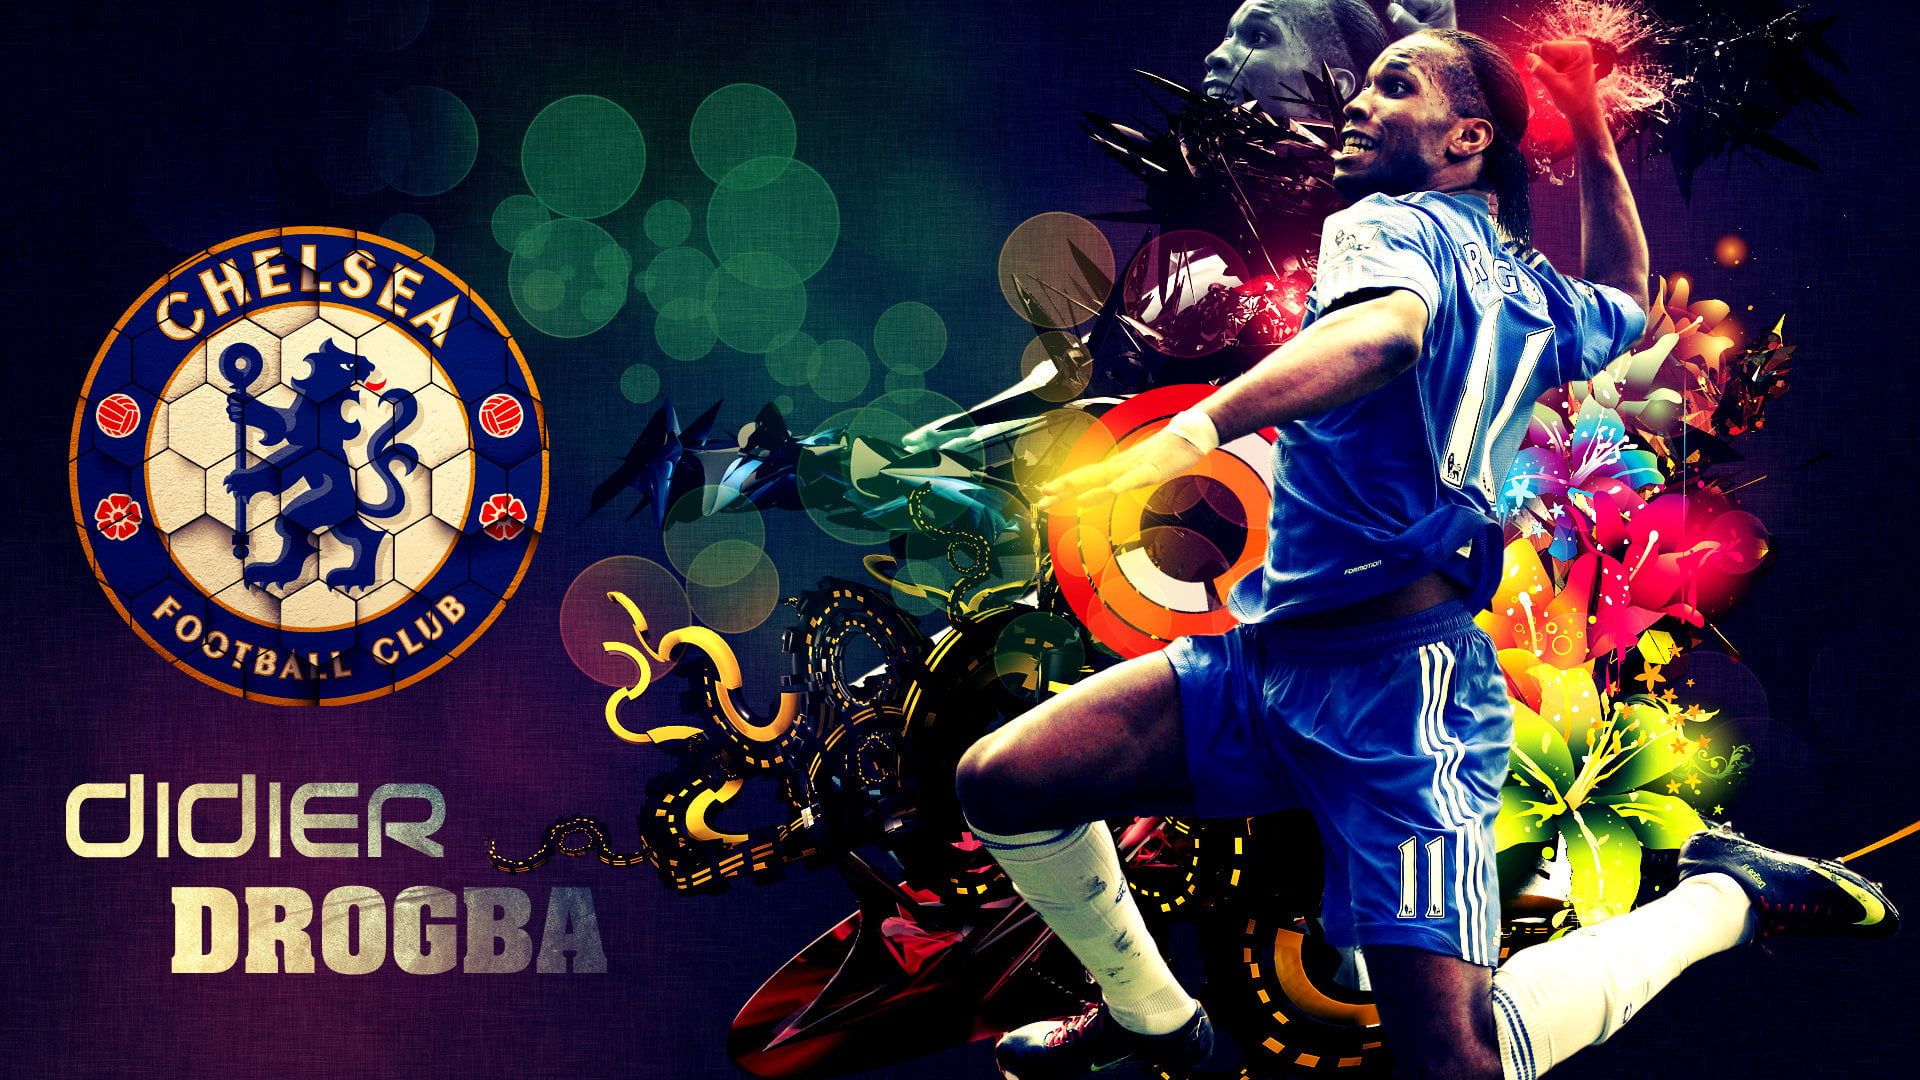 Chelsea Hintergrundbild 1920x1080. Chelsea Football digital wallpaper HD wallpaper